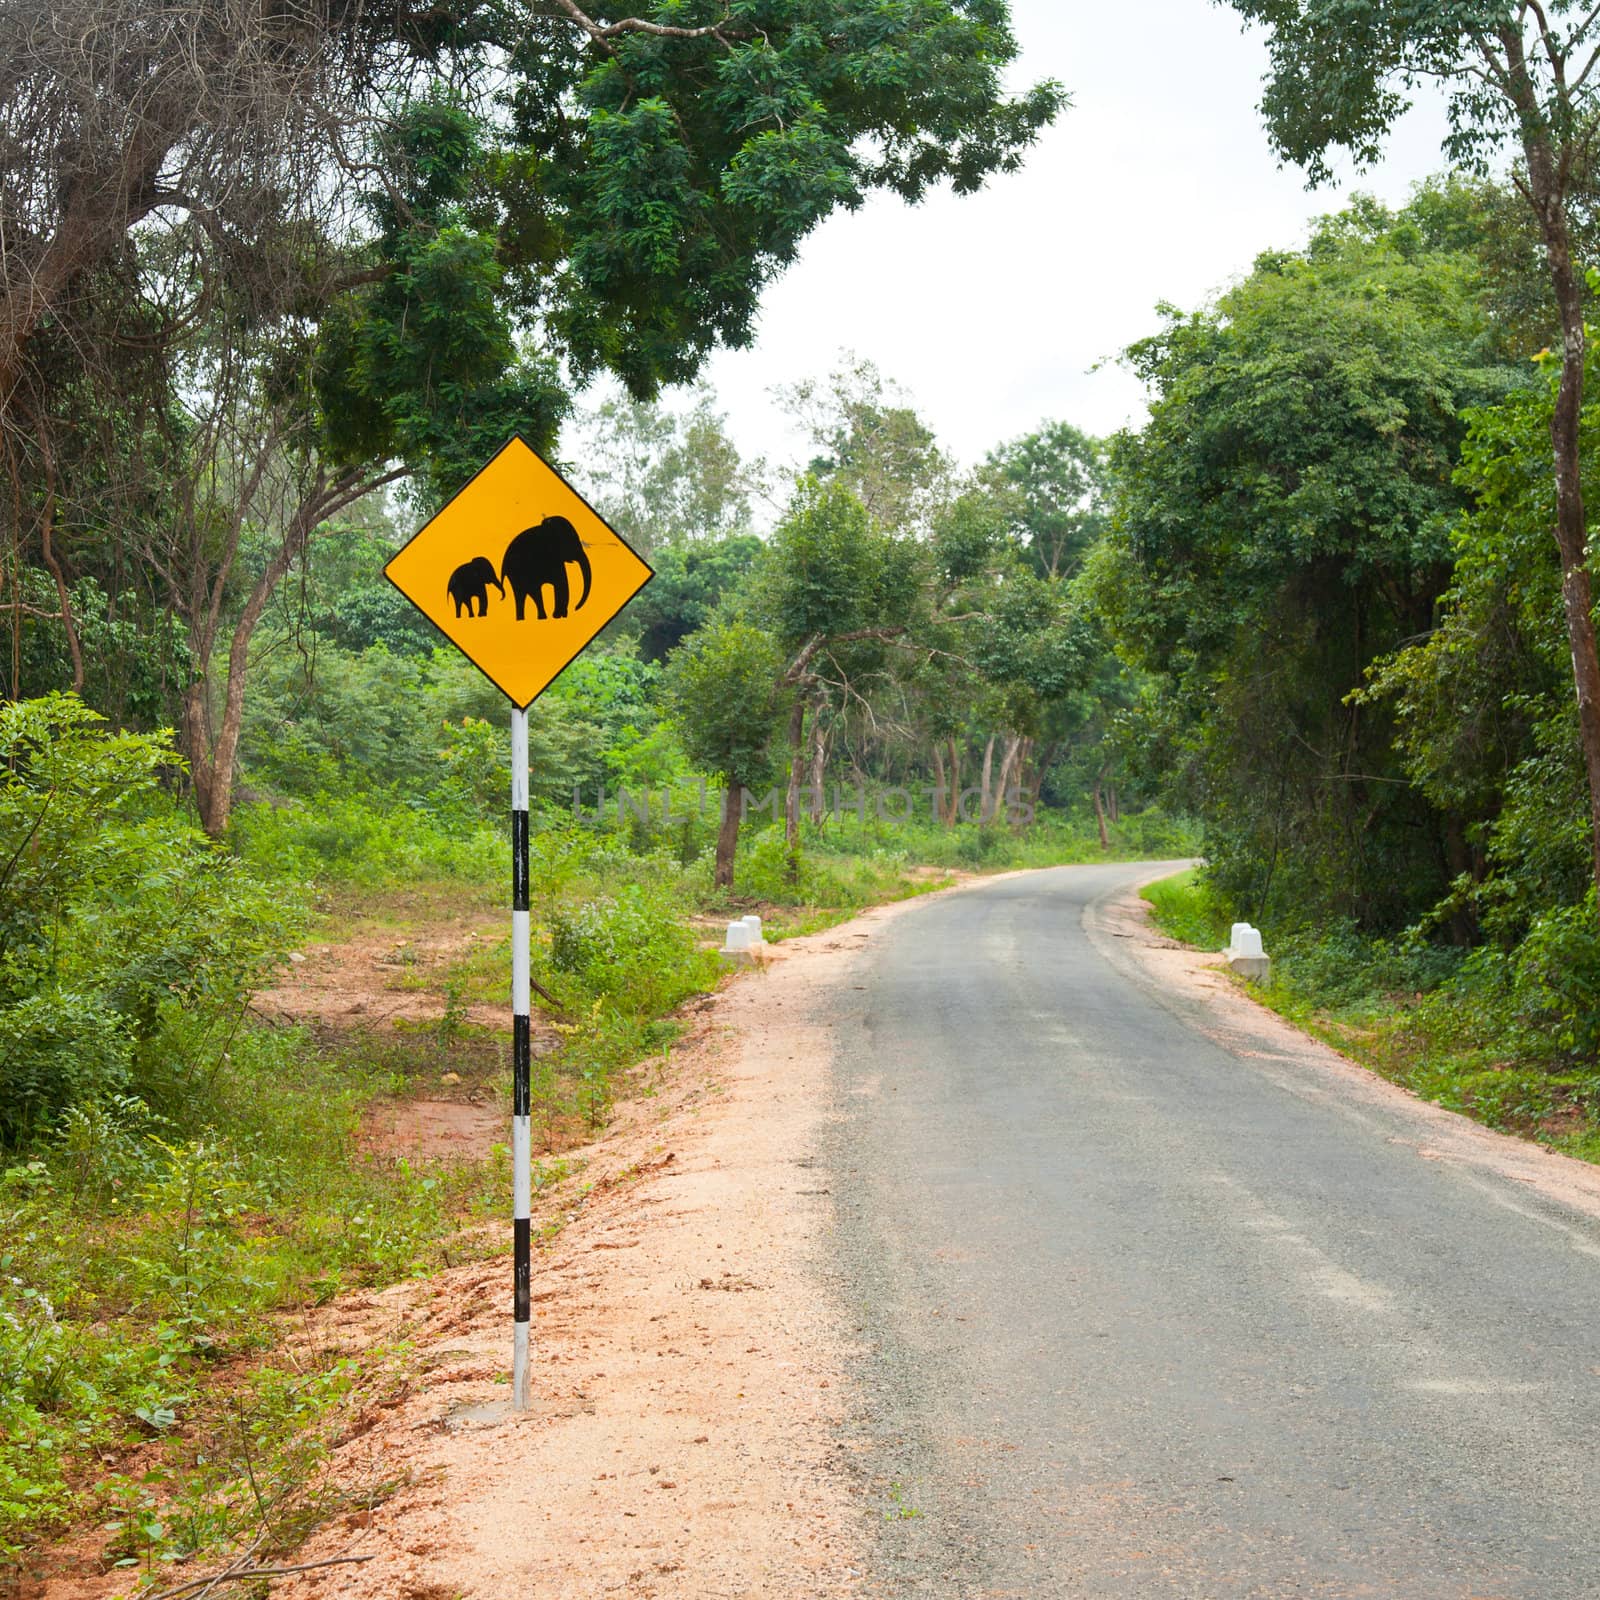 Elephants crossing the road sign in Sri Lanka